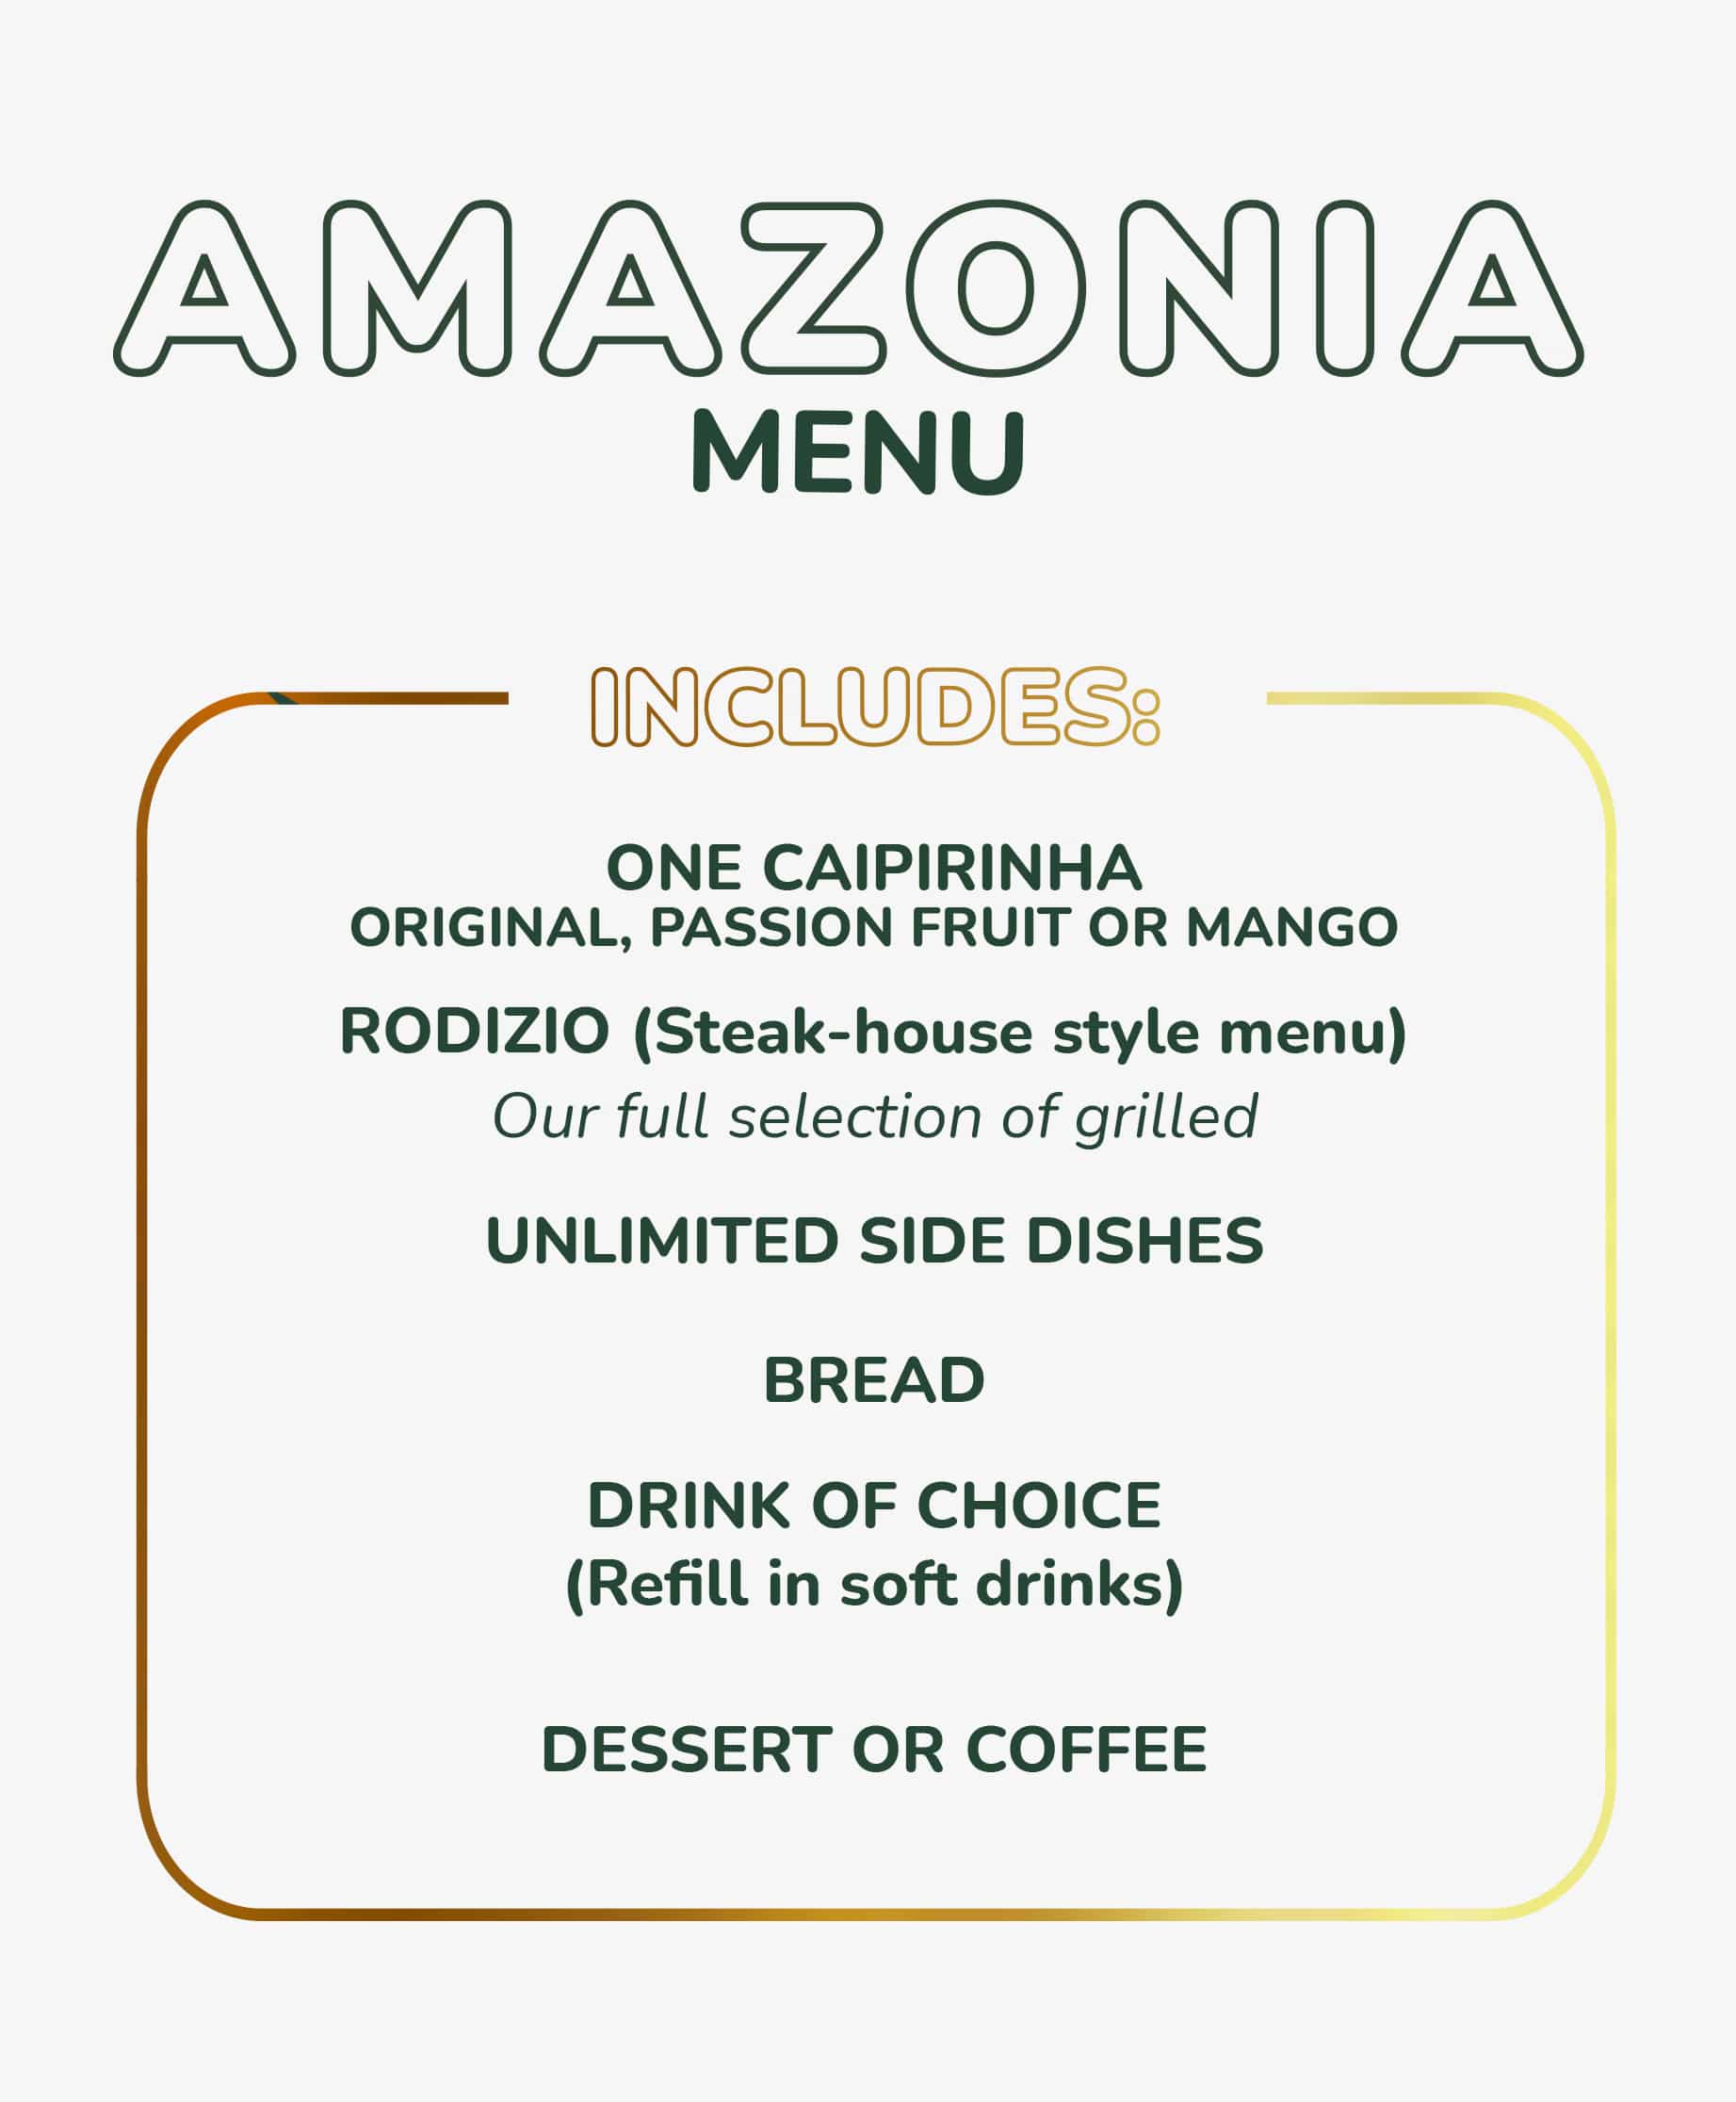 menu amazonia